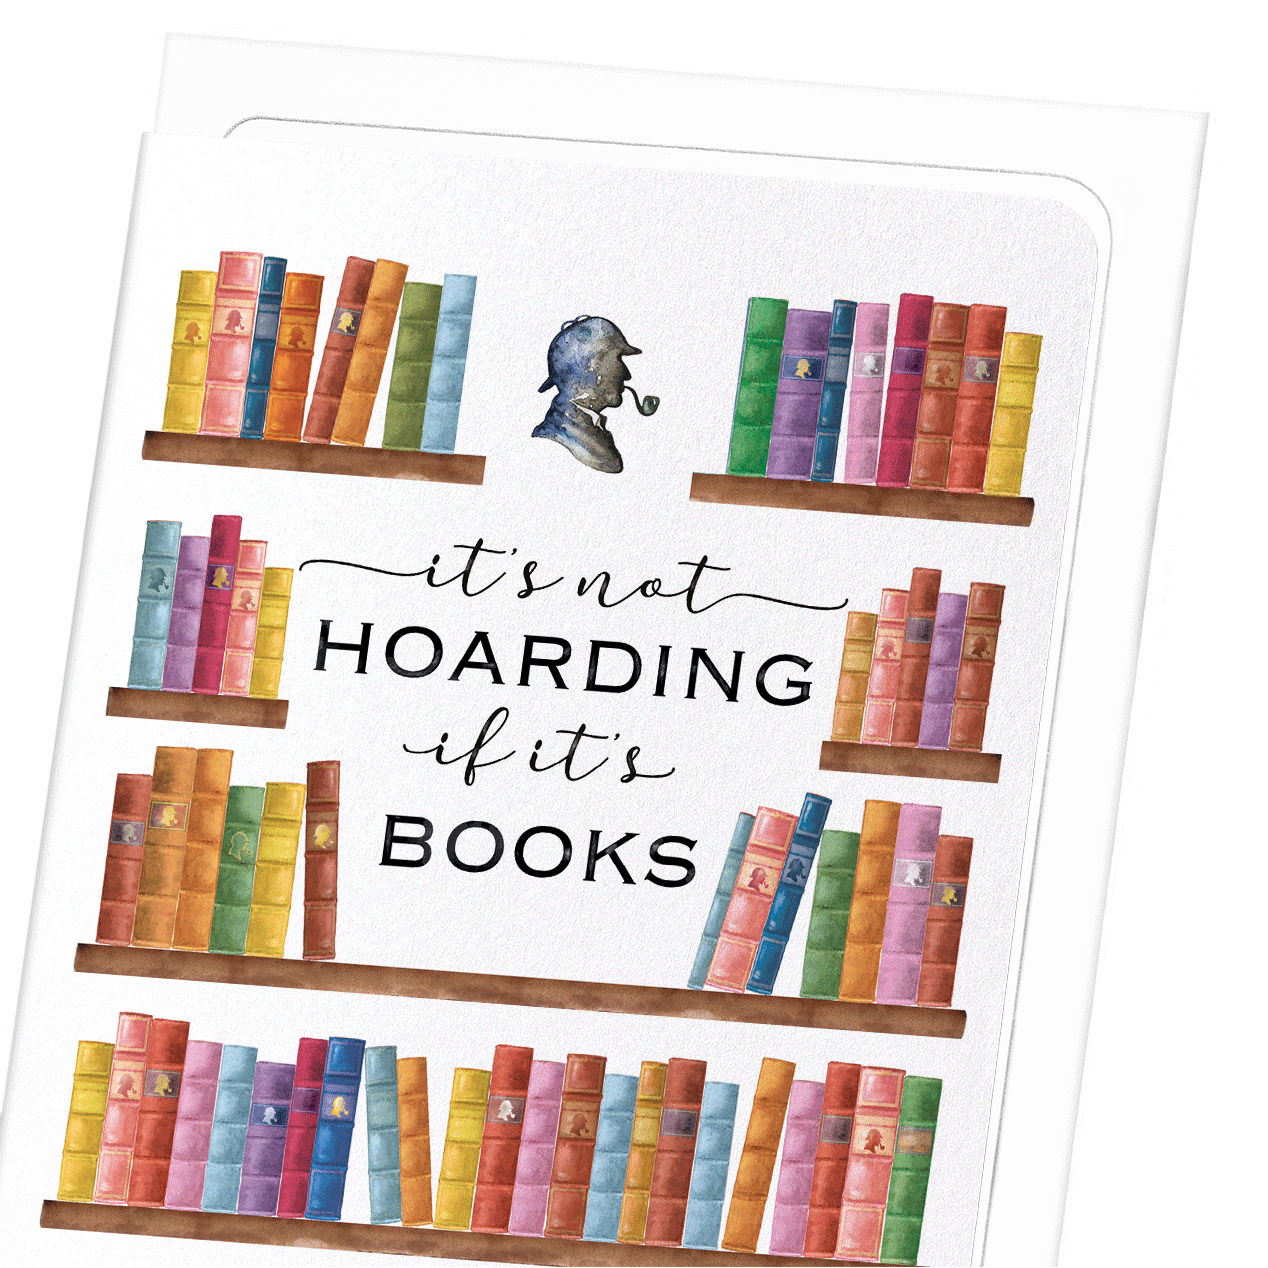 SHERLOCK HOLMES HOARDING BOOK: Bespoke Greeting Card